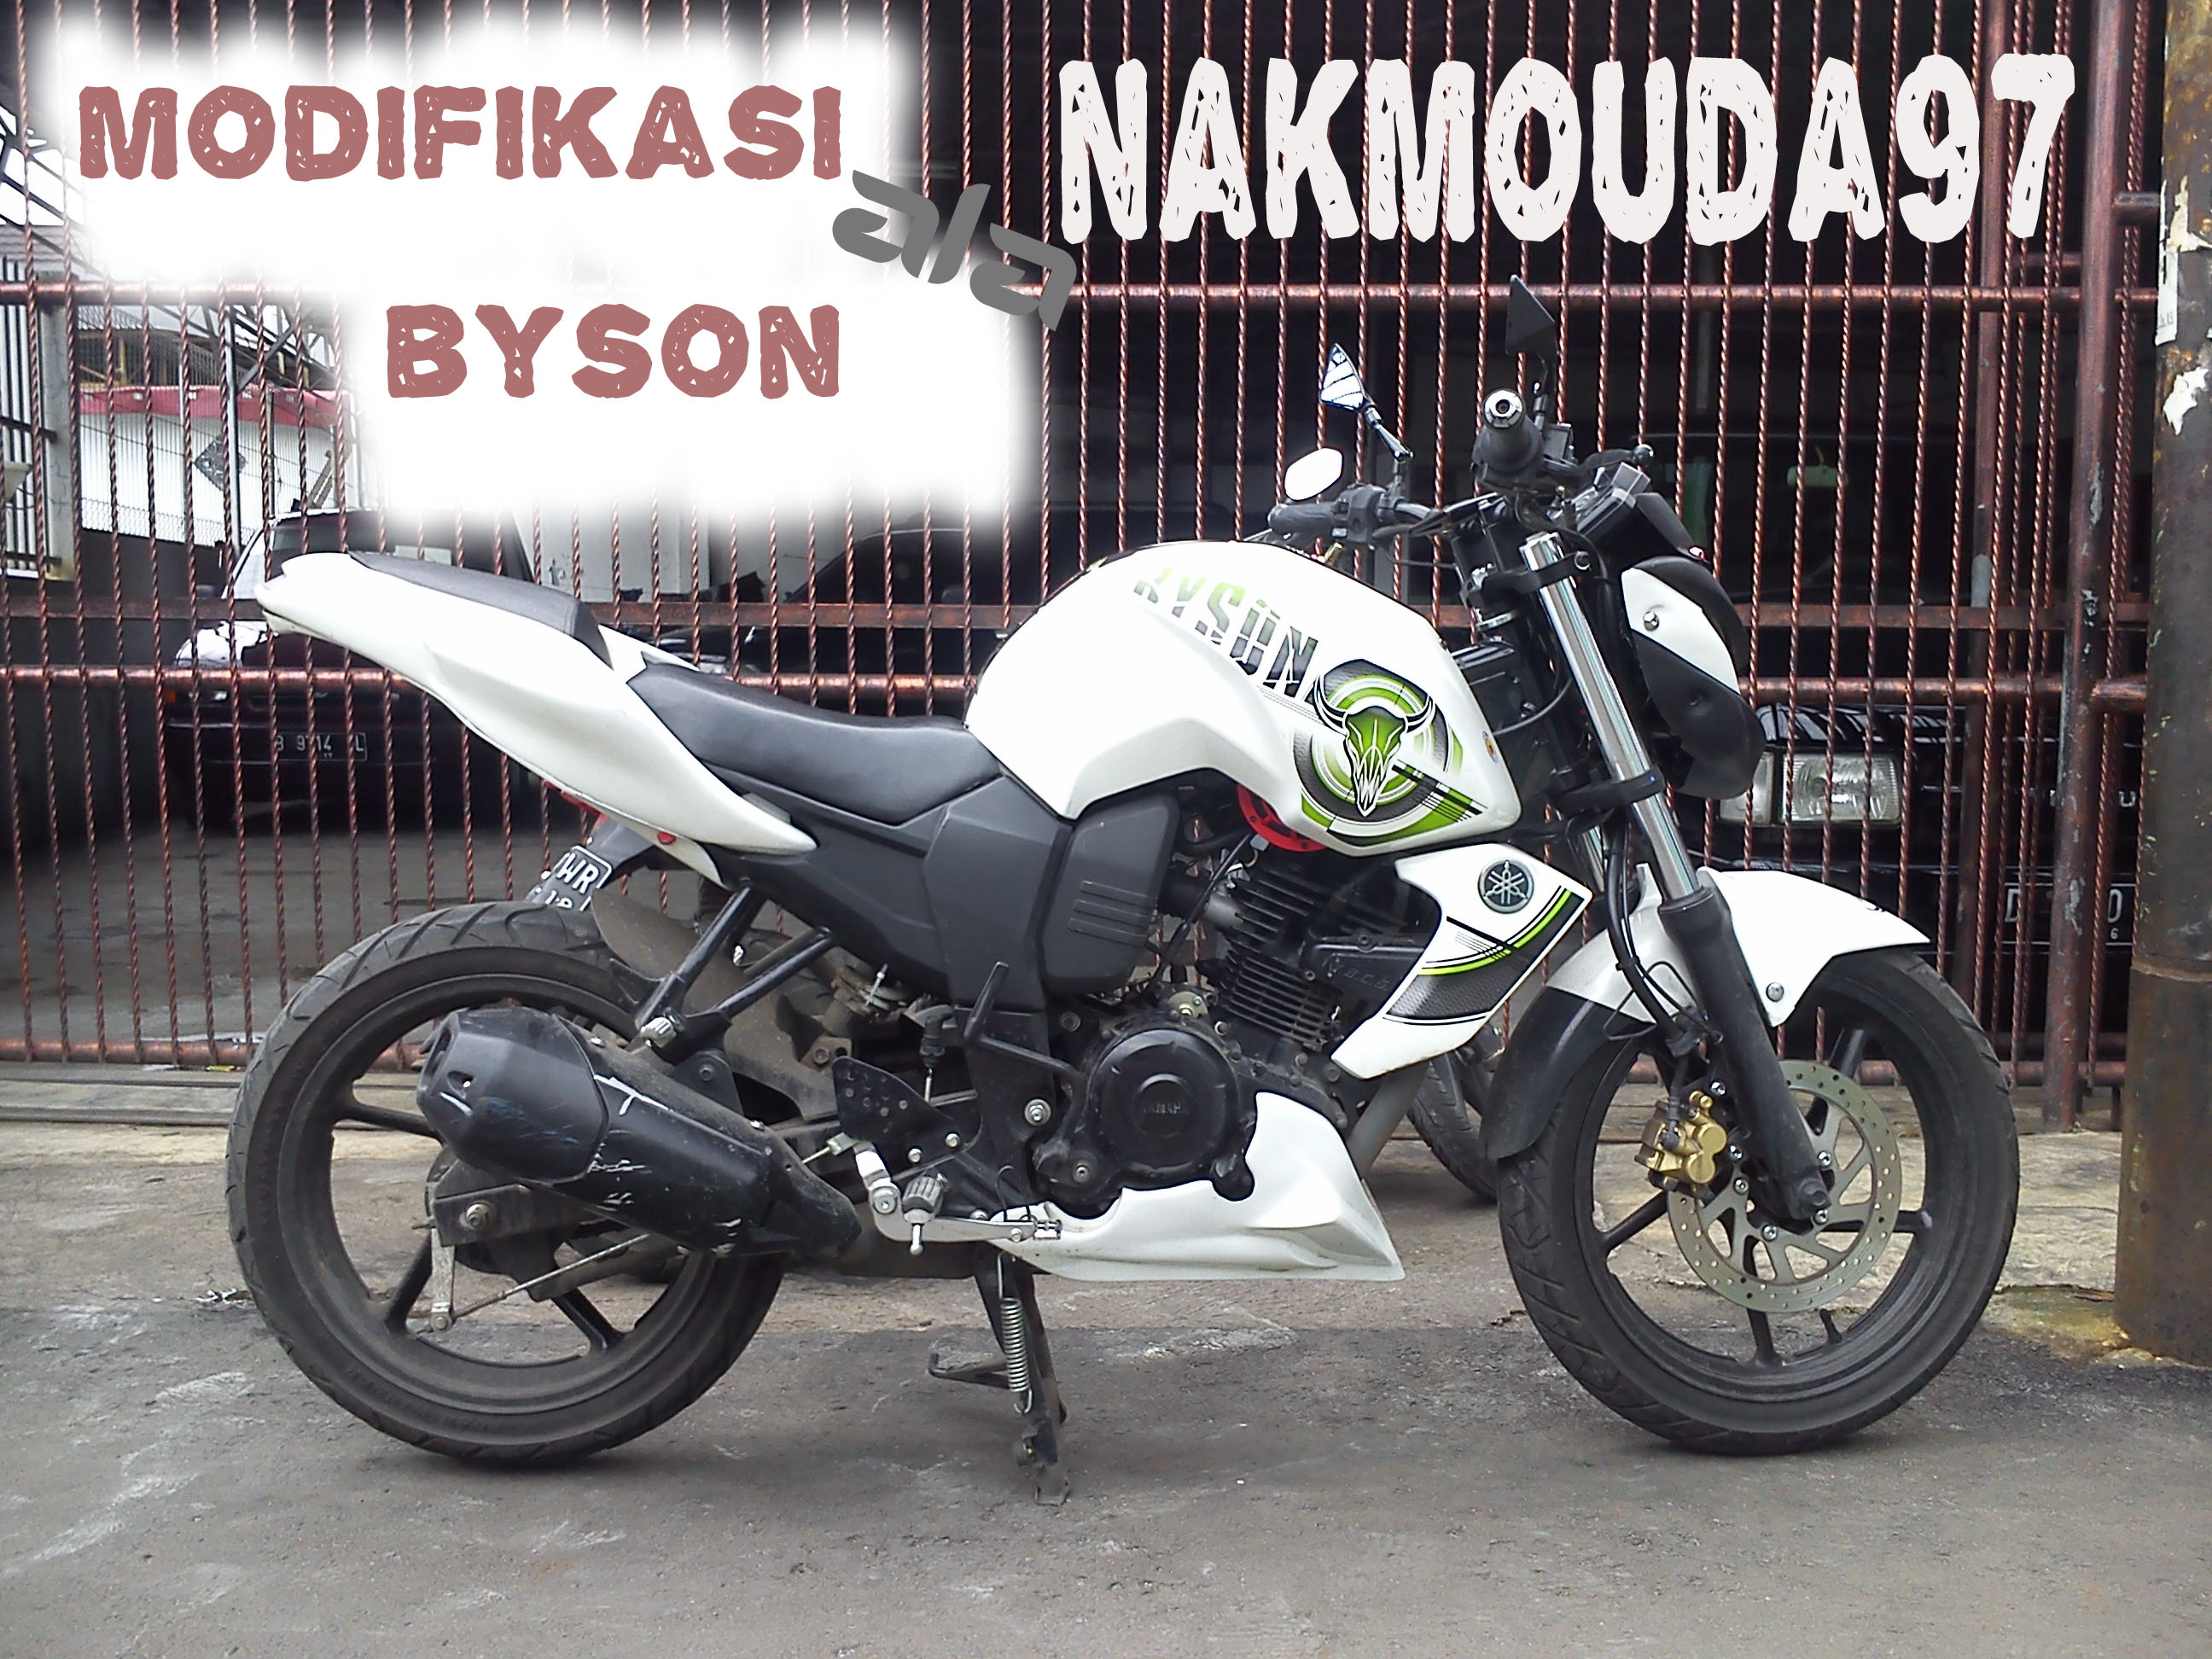 Modifikasi Simple Yamaha Byson Gak Bikin Dompet Tipis Nakmouda97